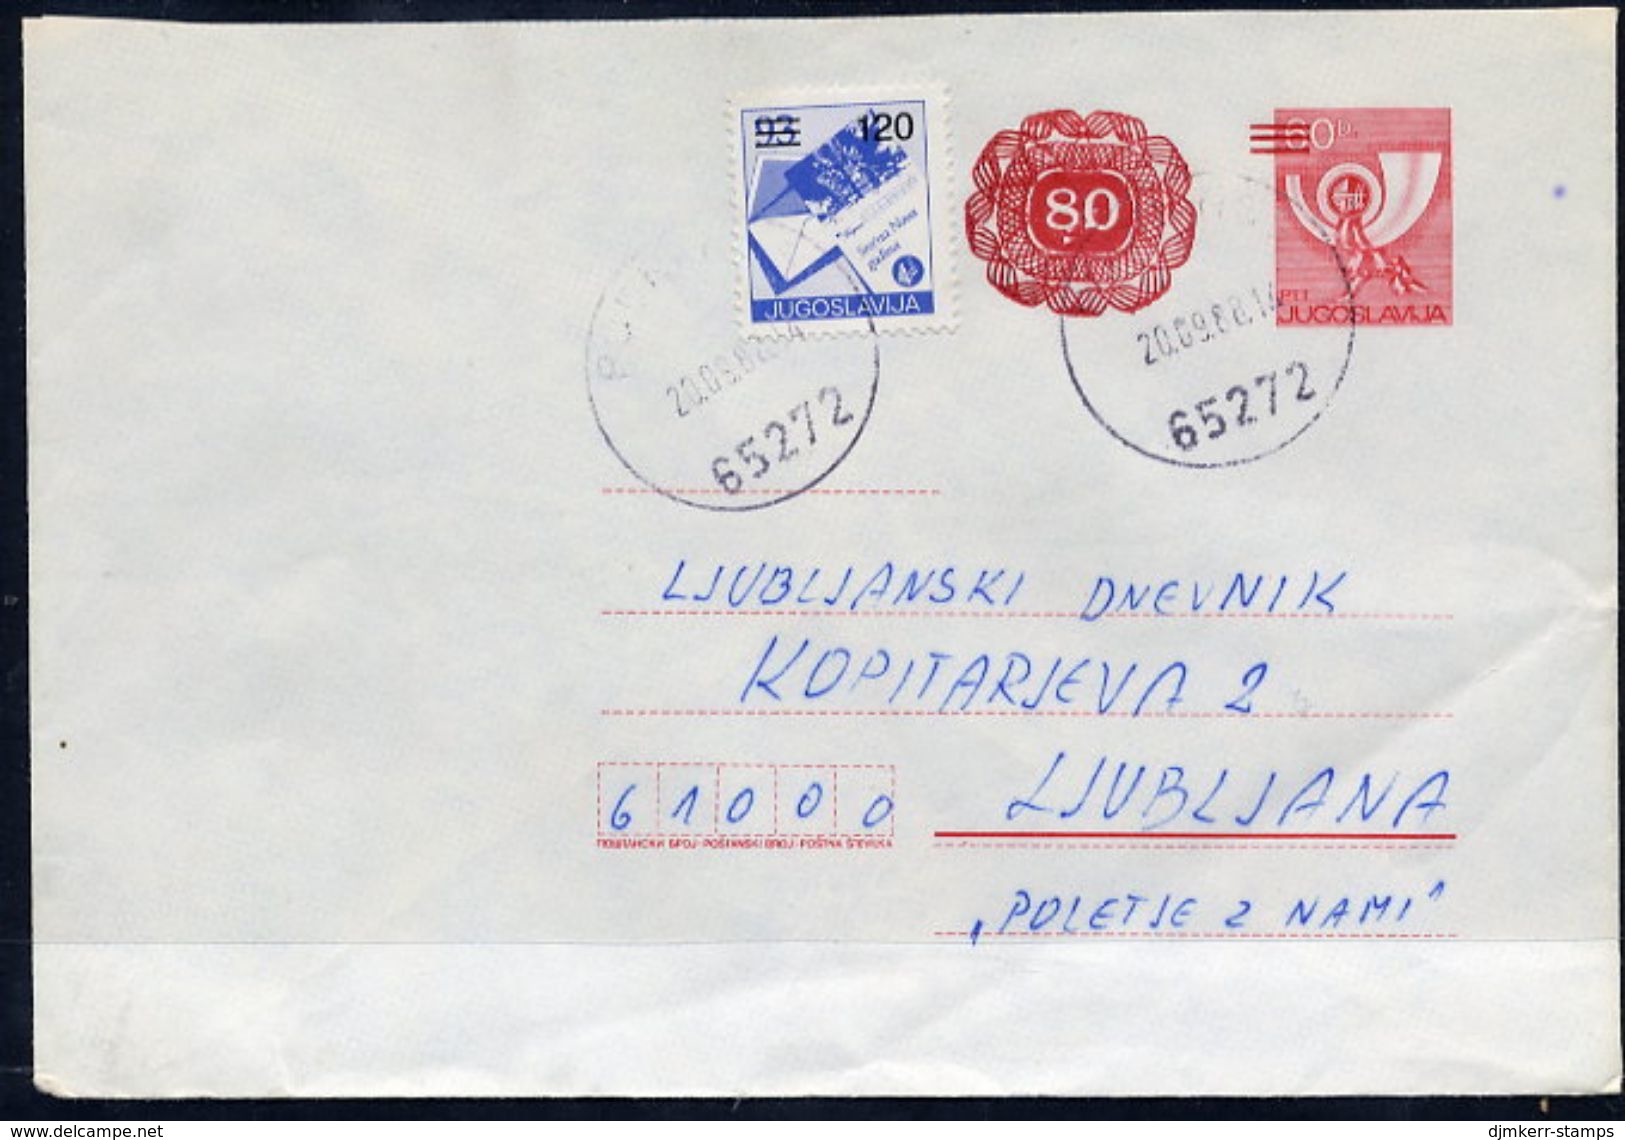 YUGOSLAVIA 1987 Posthorn 80/60 D.stationery Envelope  Used With Additional Franking.  Michel U78 - Interi Postali